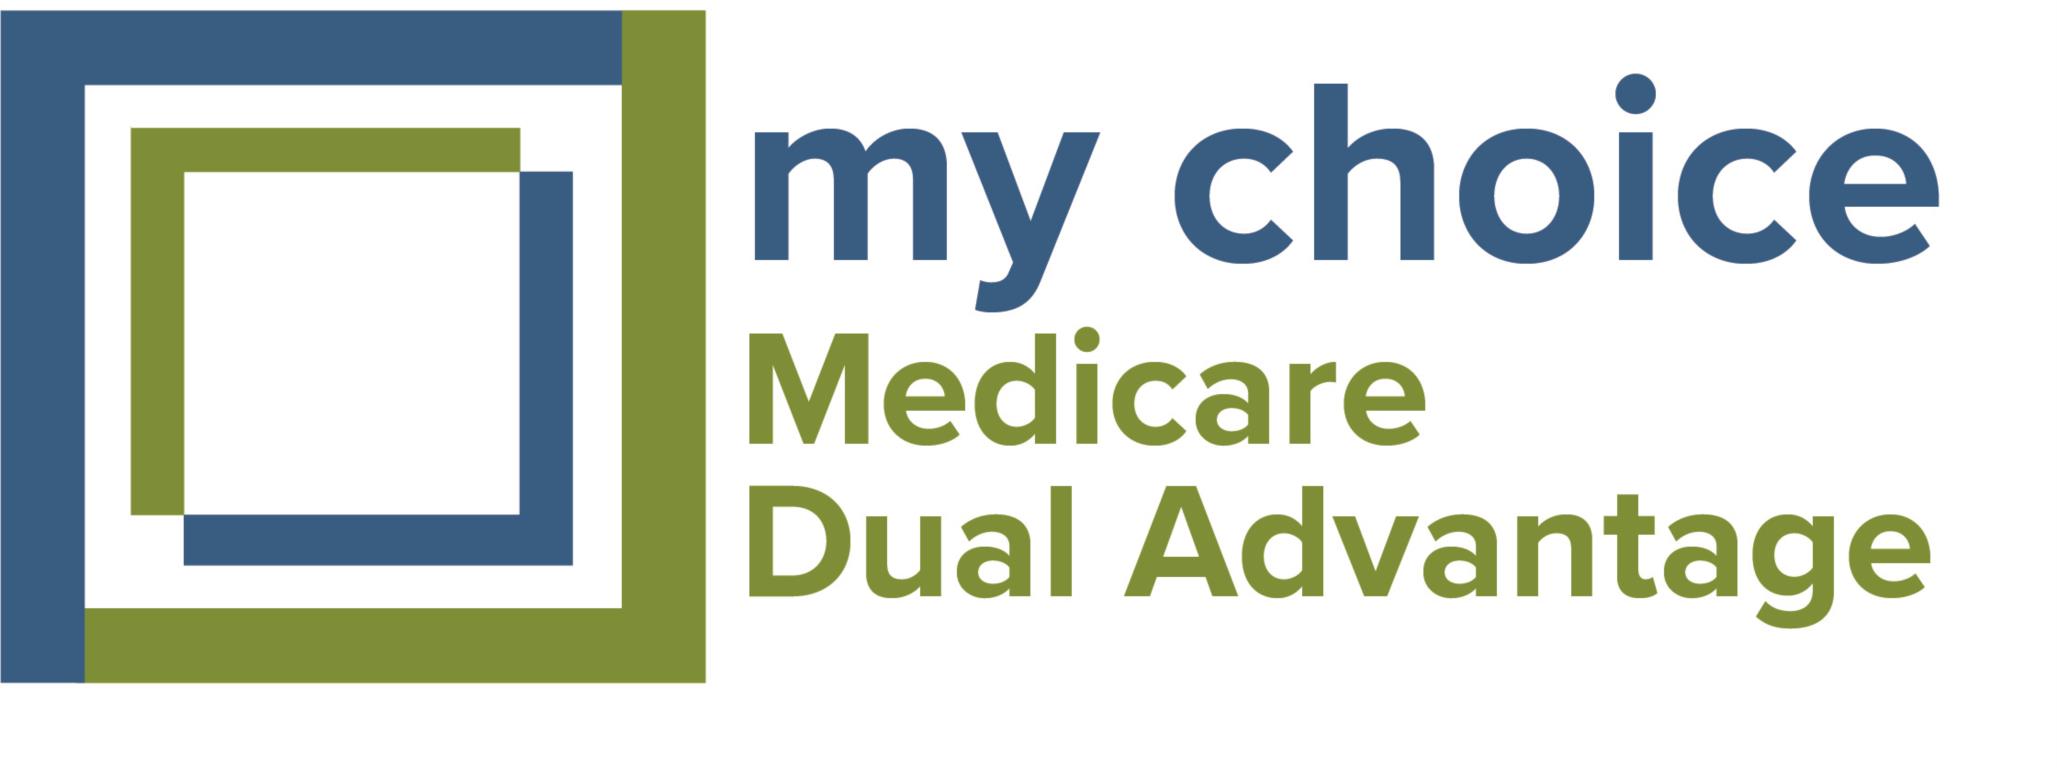 My Choice Medicare Dual Advantage